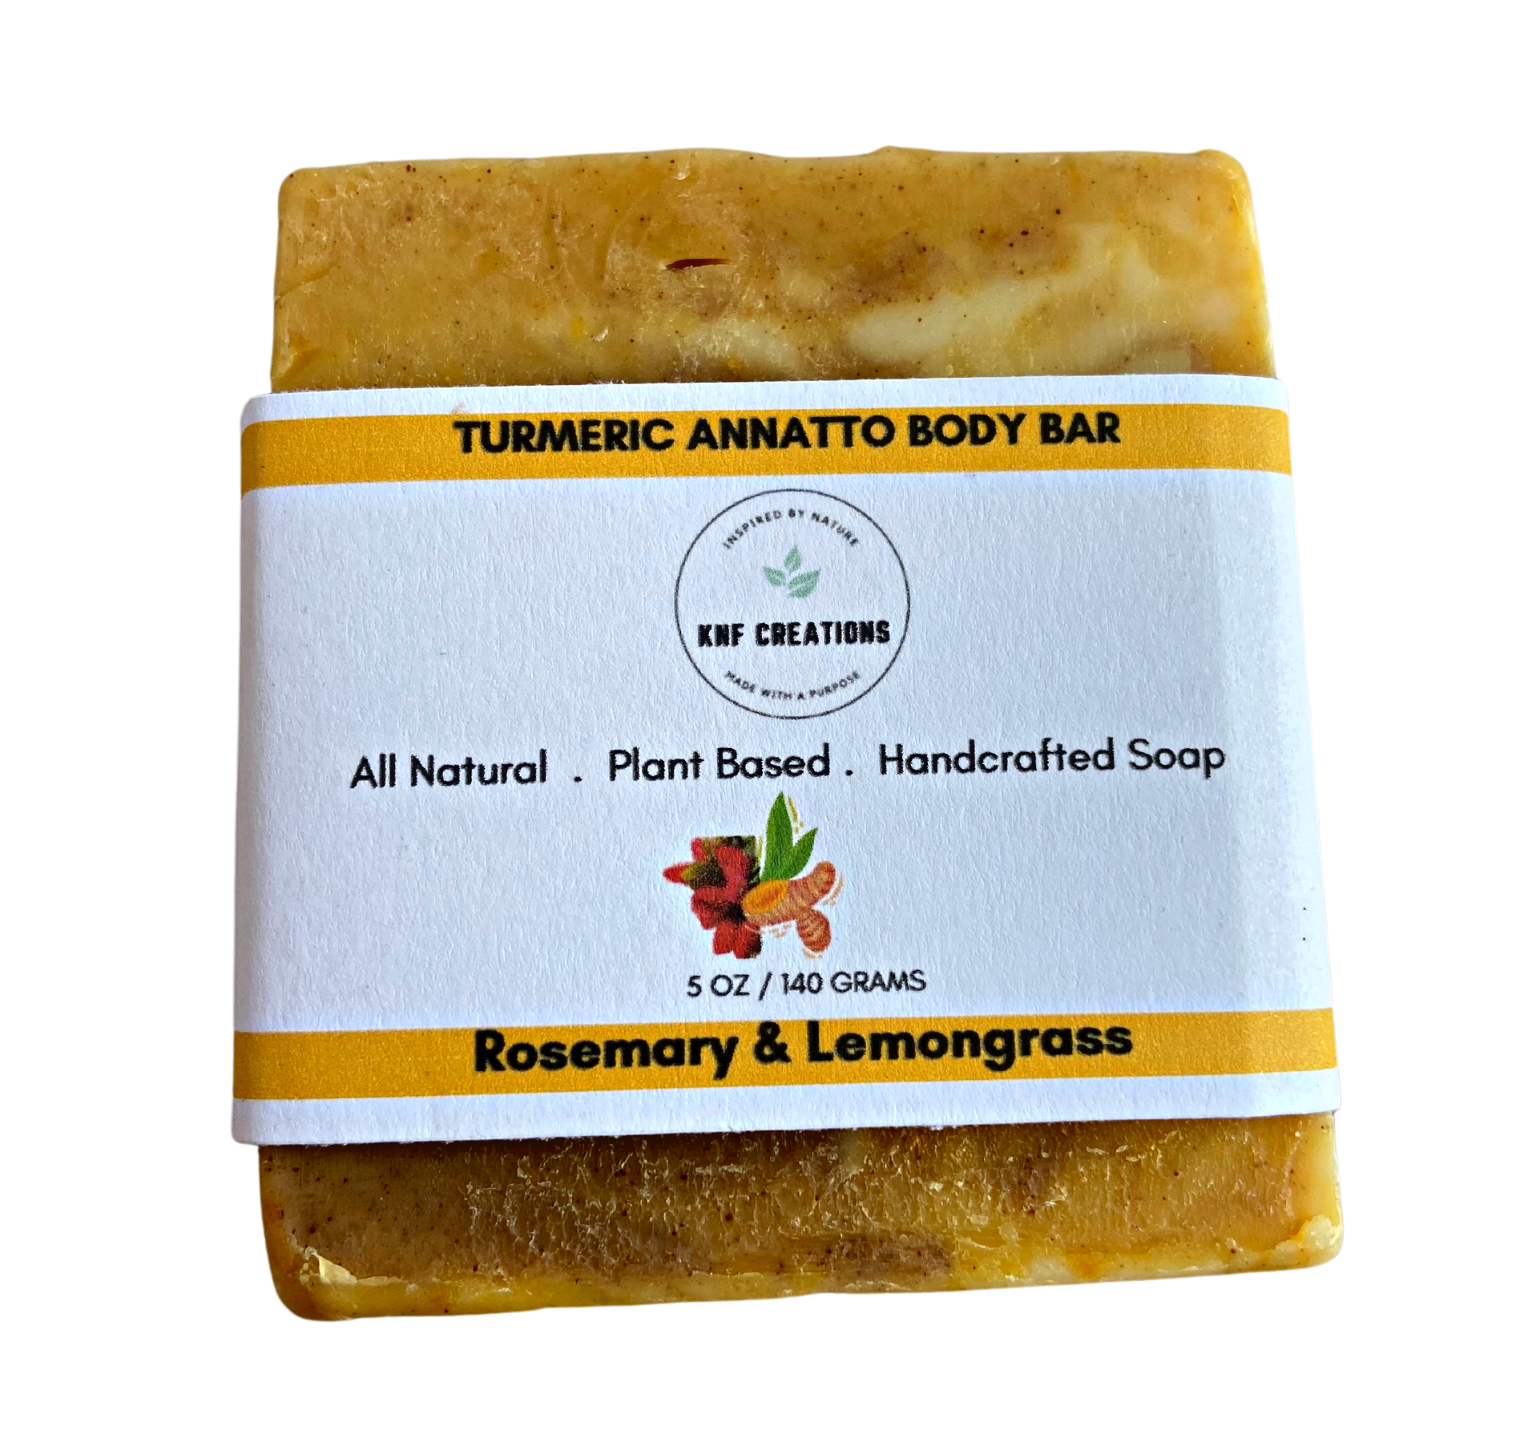 Turmeric & Annatto Soap with Rosemary and Lemongrass Essential Oils